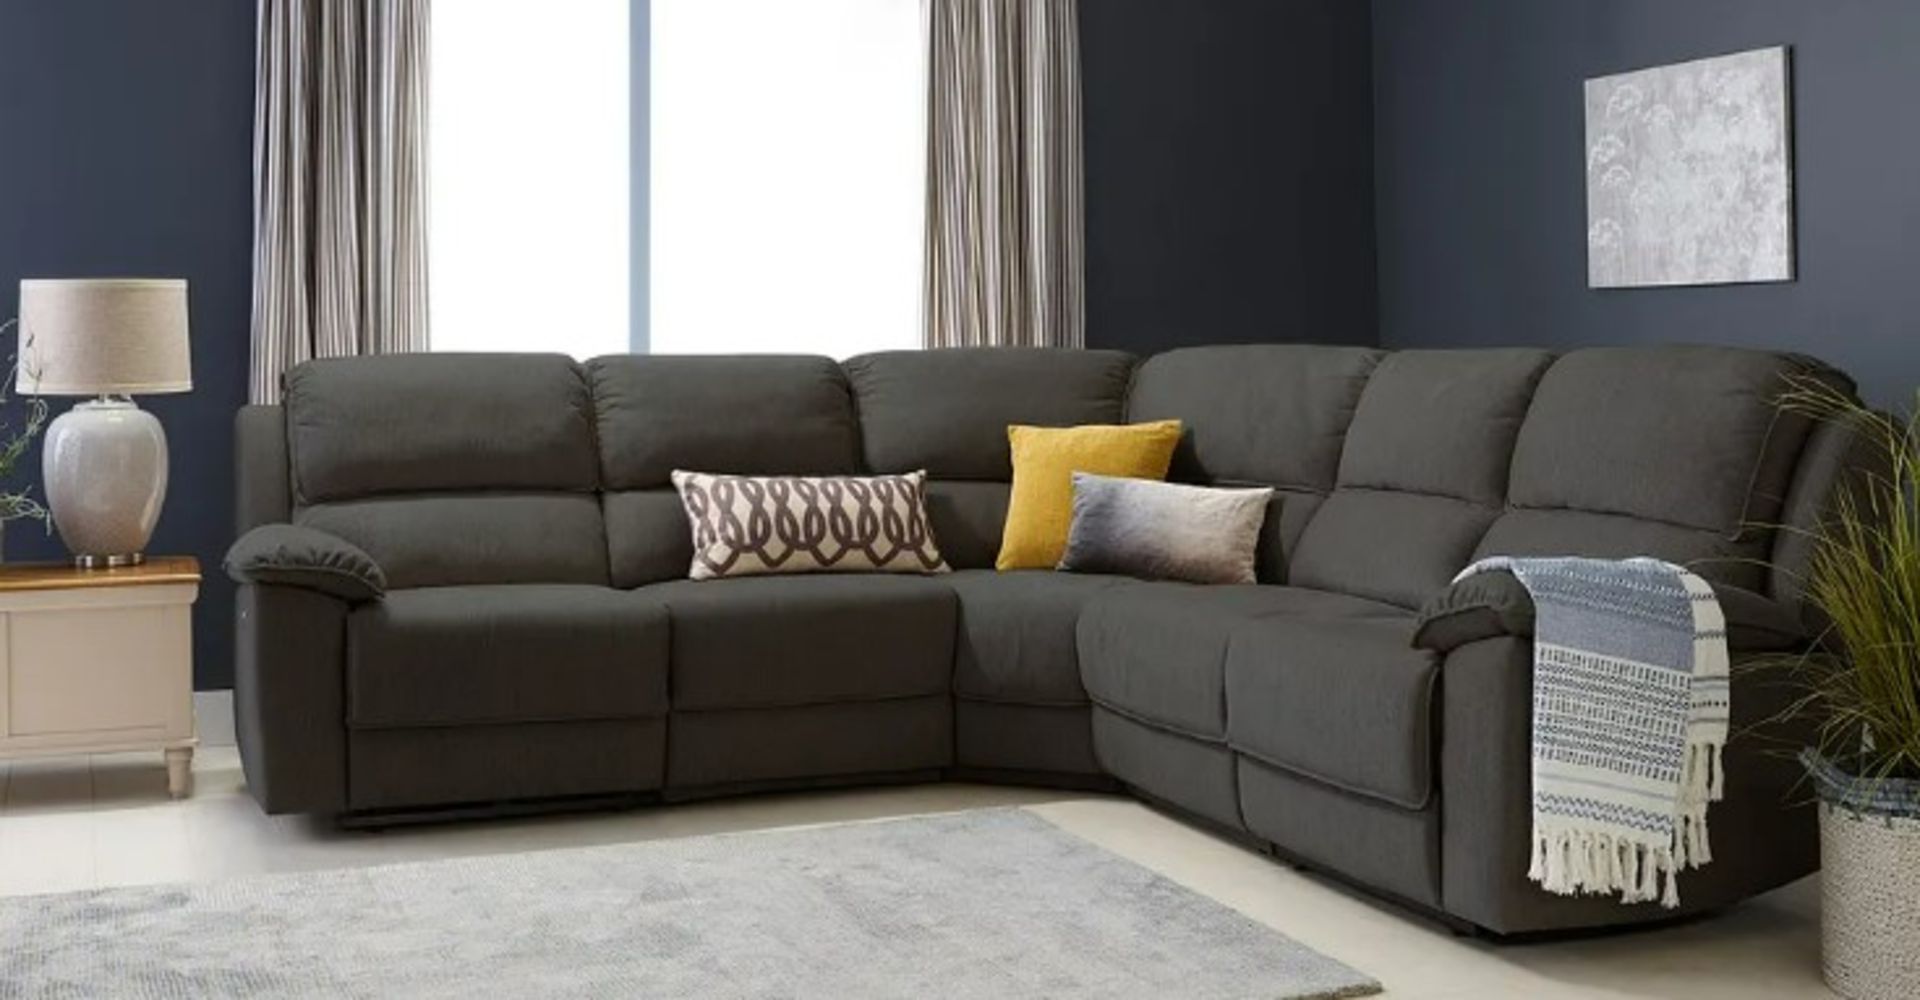 GOODWOOD 6 Seat Corner Recliner Sofa | Plush Charcoal Fabric. RRP £2,549. (ROW7-6BOXES) The Goodwood